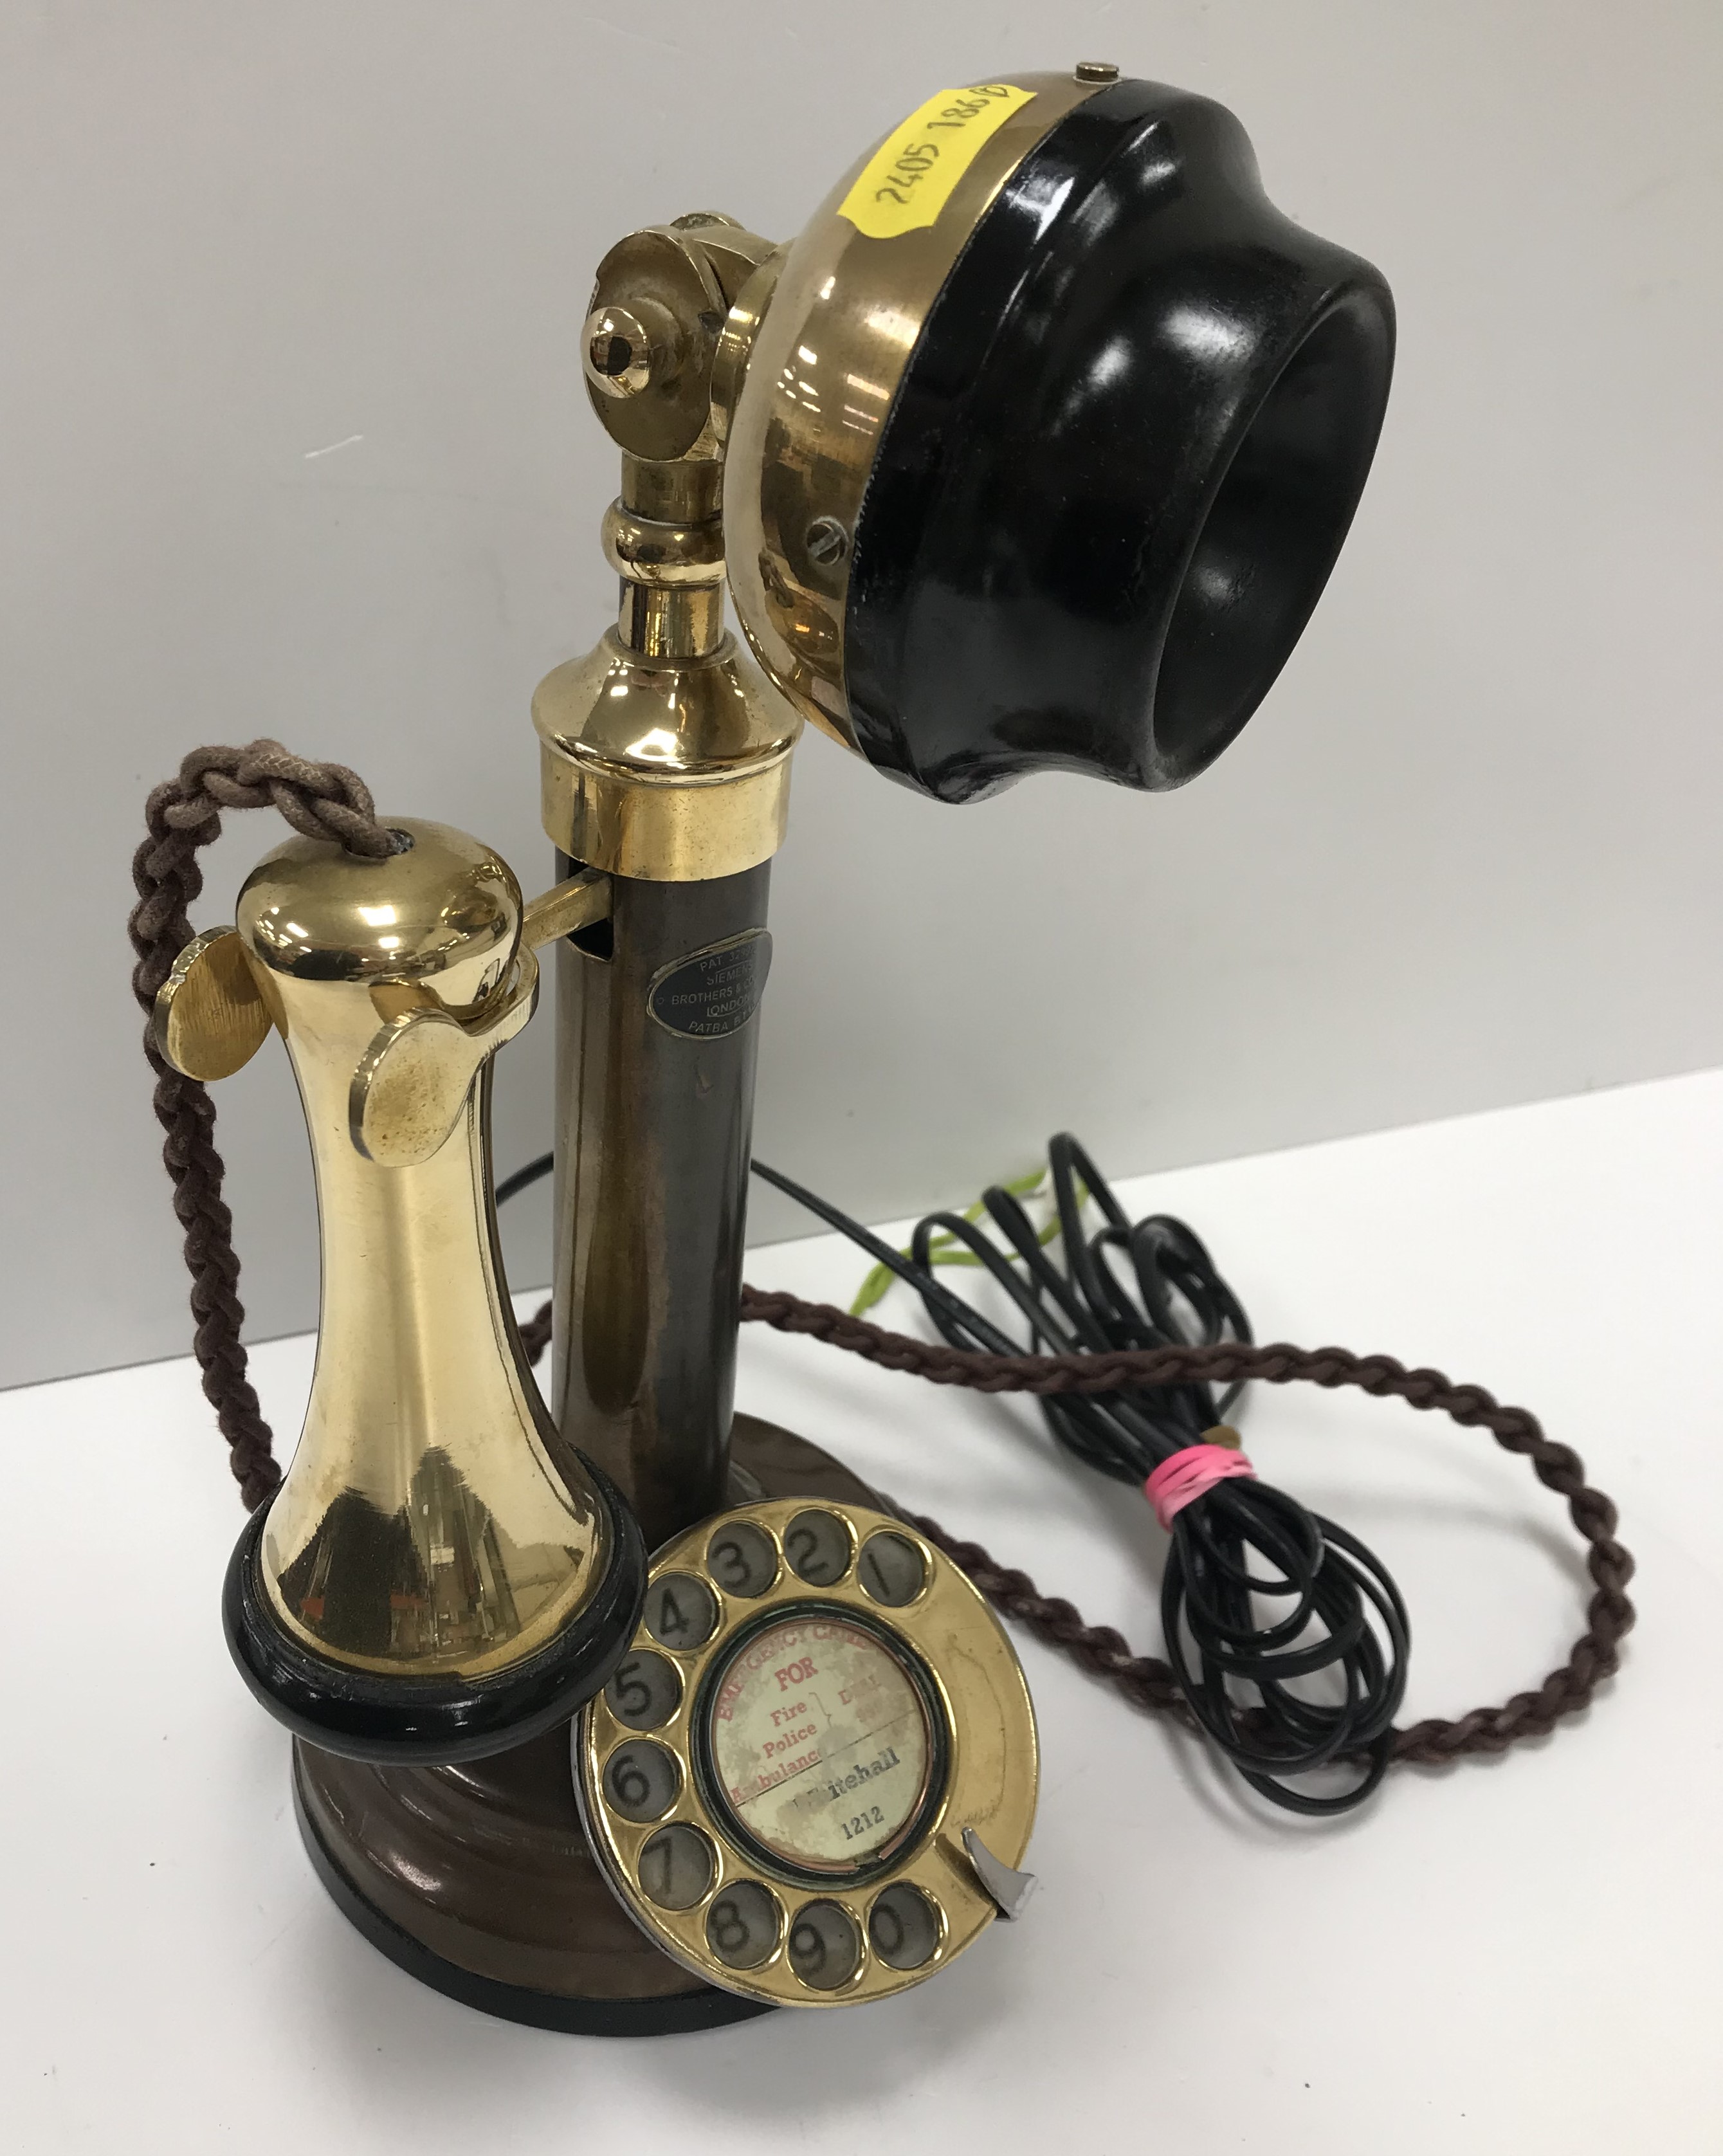 A vintage Siemens Brothers & Co Ltd of London brass candlestick telephone (PATBA-B/1B) 30 cm high